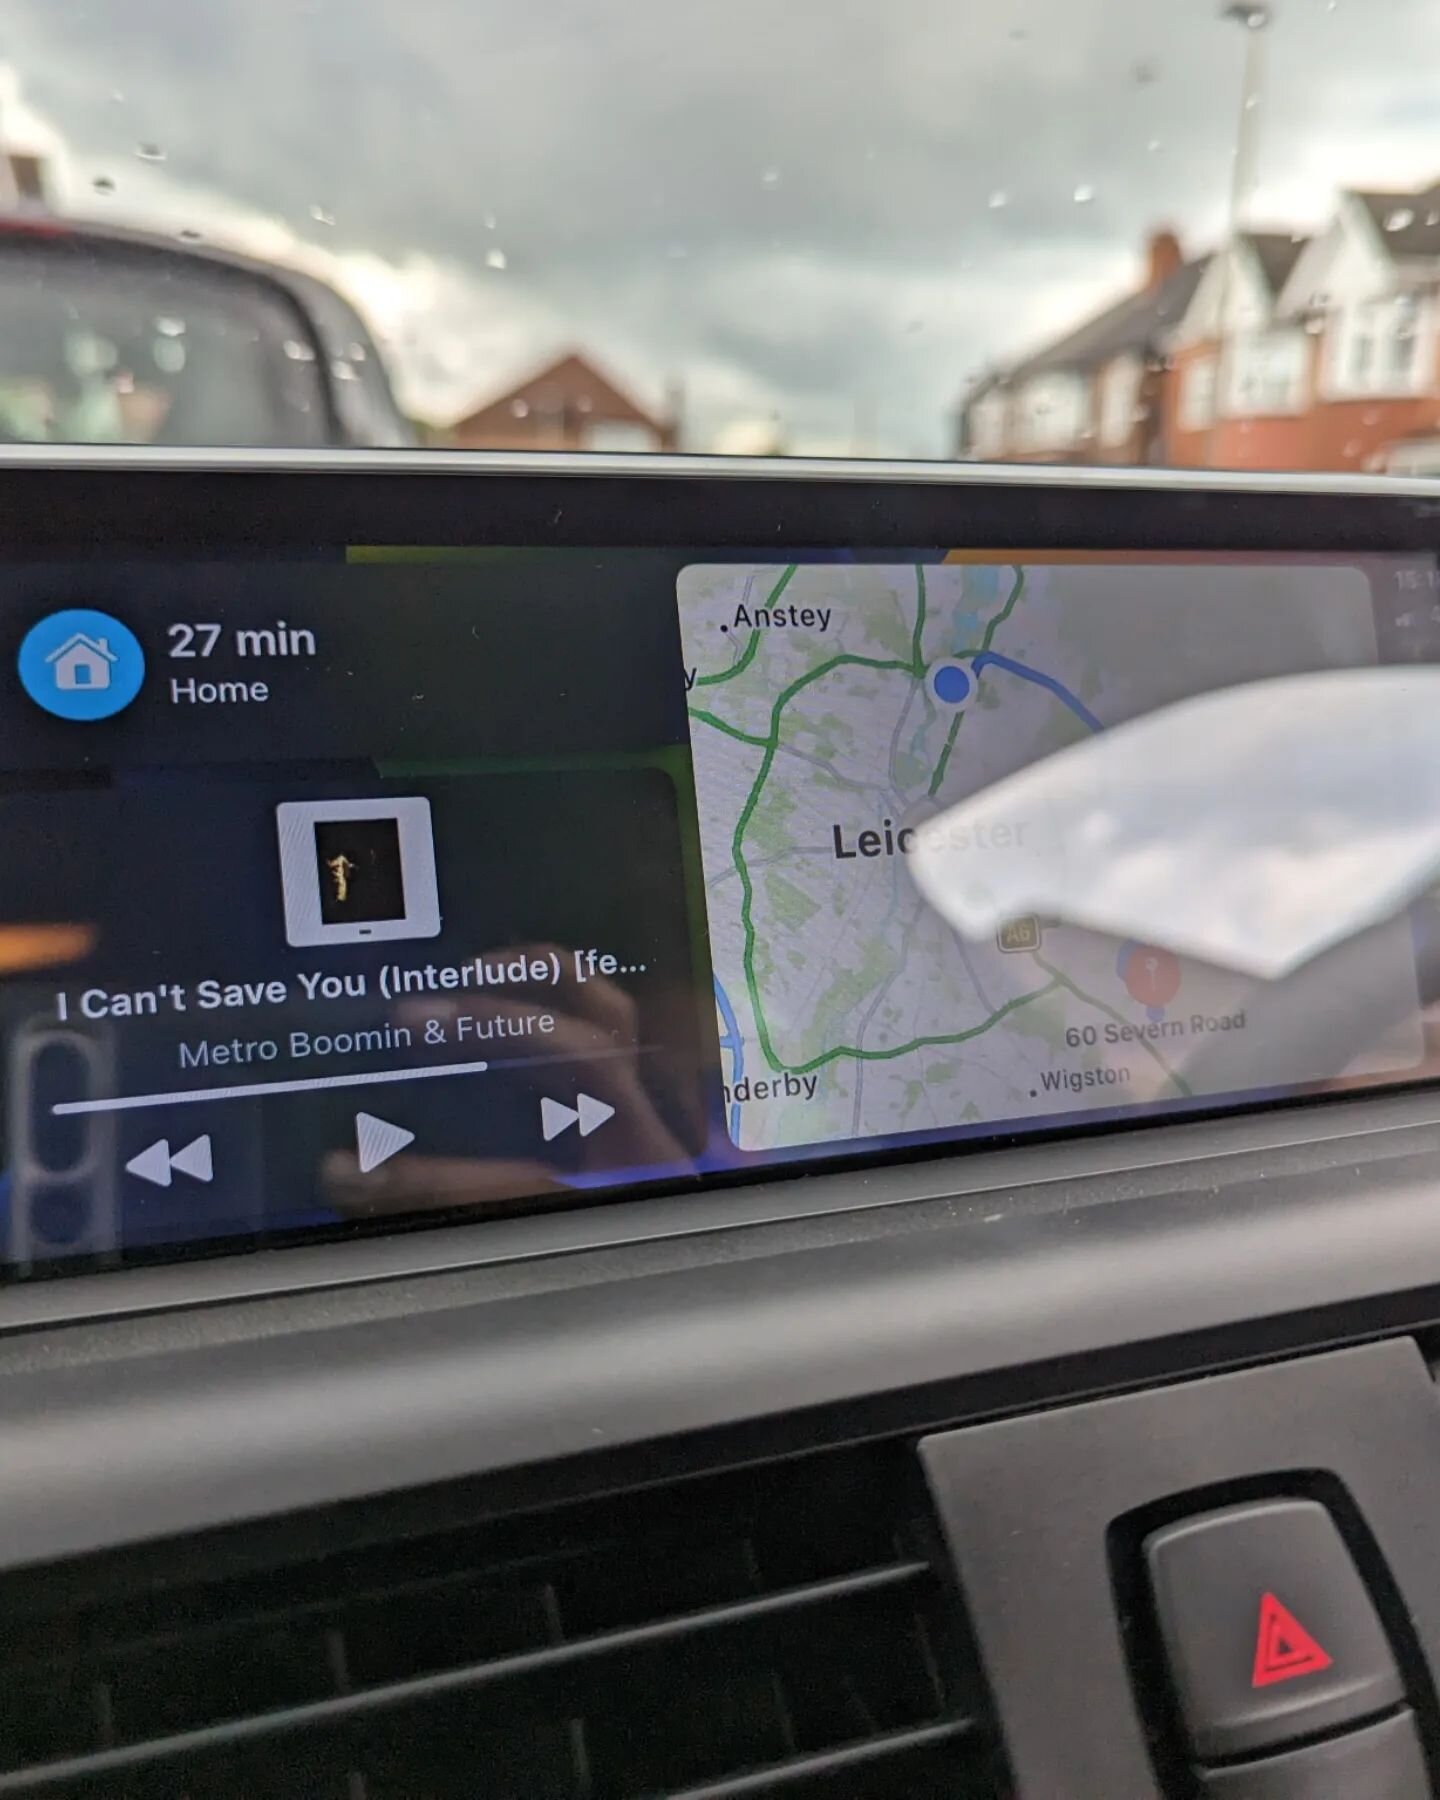 BMW 1 Series in for a Carplay screen upgrade

Apple Carplay 🍎
Android Auto 📱
Reverse Camera 📷
Screen Mirroring 🖥️
Video Playback 🎦
USB Media ▶️

#applecarplay #androidauto #caraudio #caraudioleicester #leicestercarscene #bmw #bmwupgrade #bmwcarp